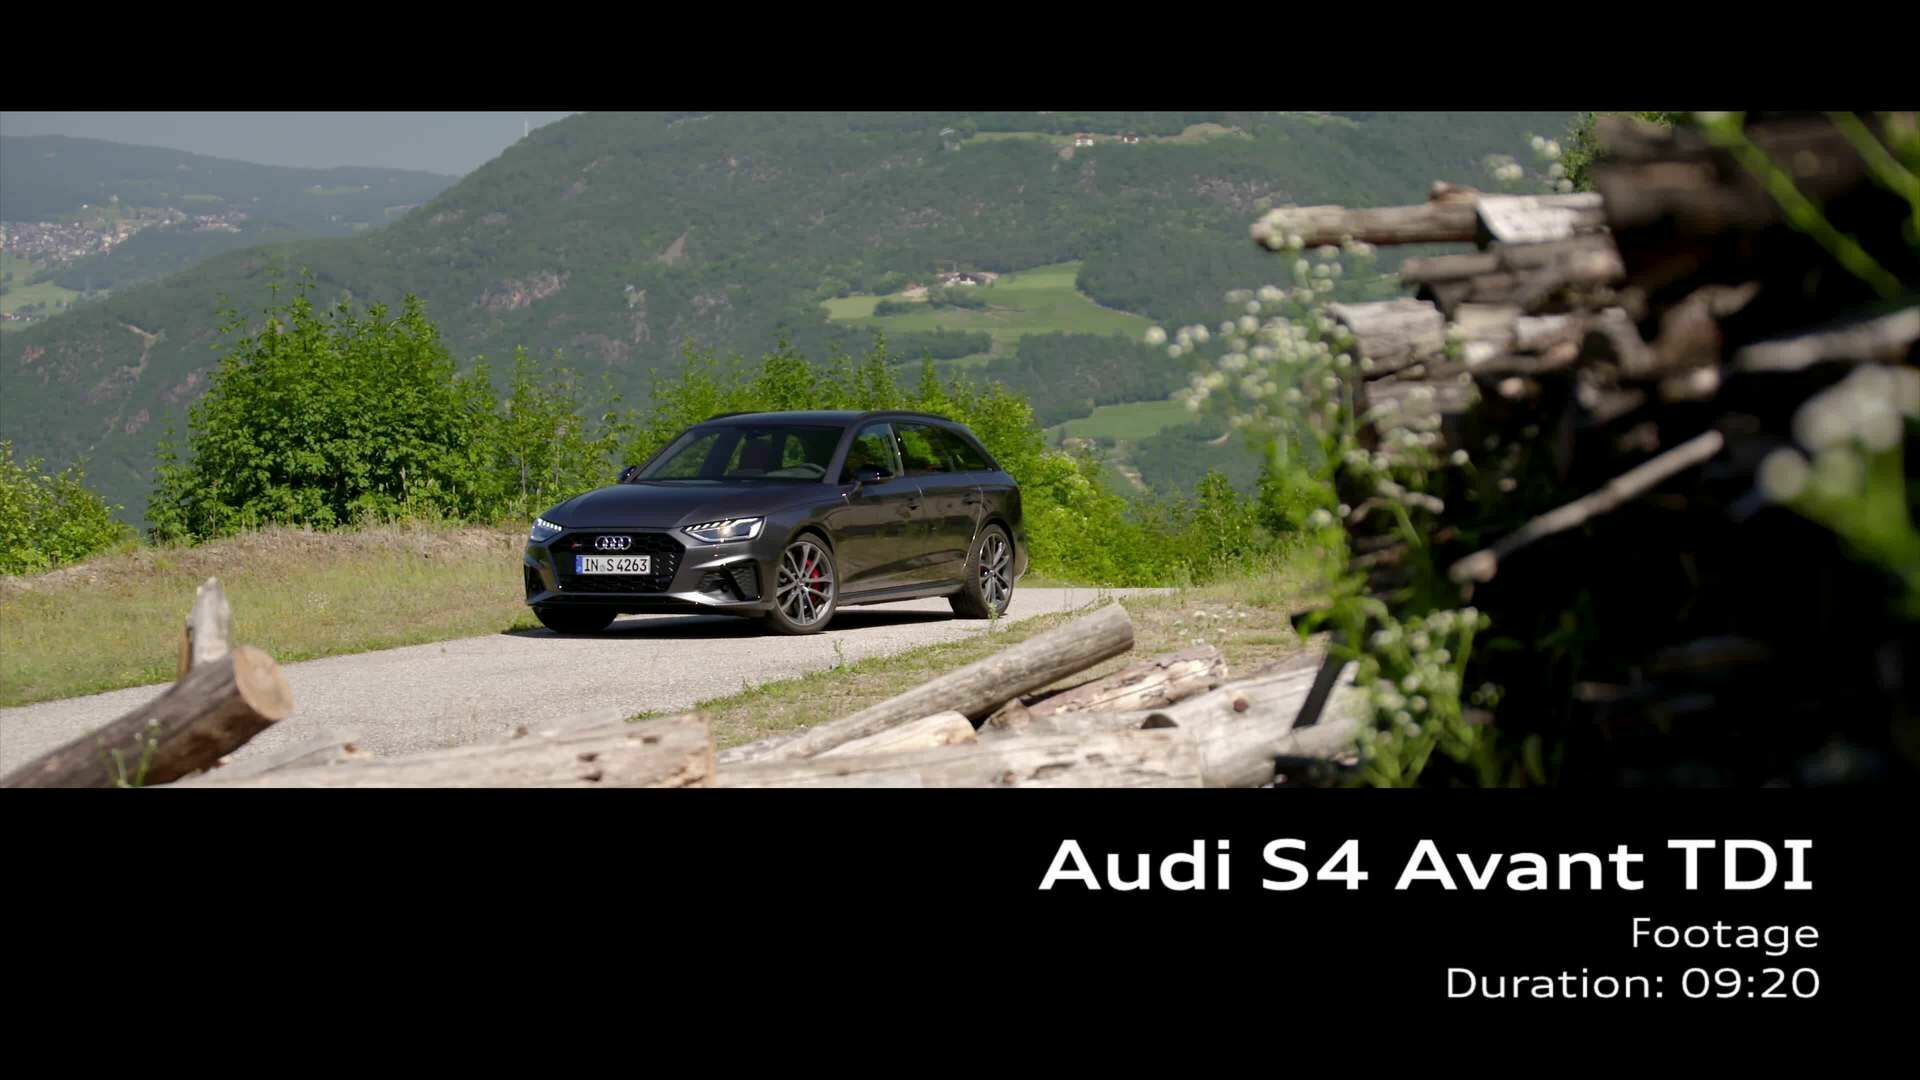 Audi S4 Avant TDI Daytona Grey (footage)